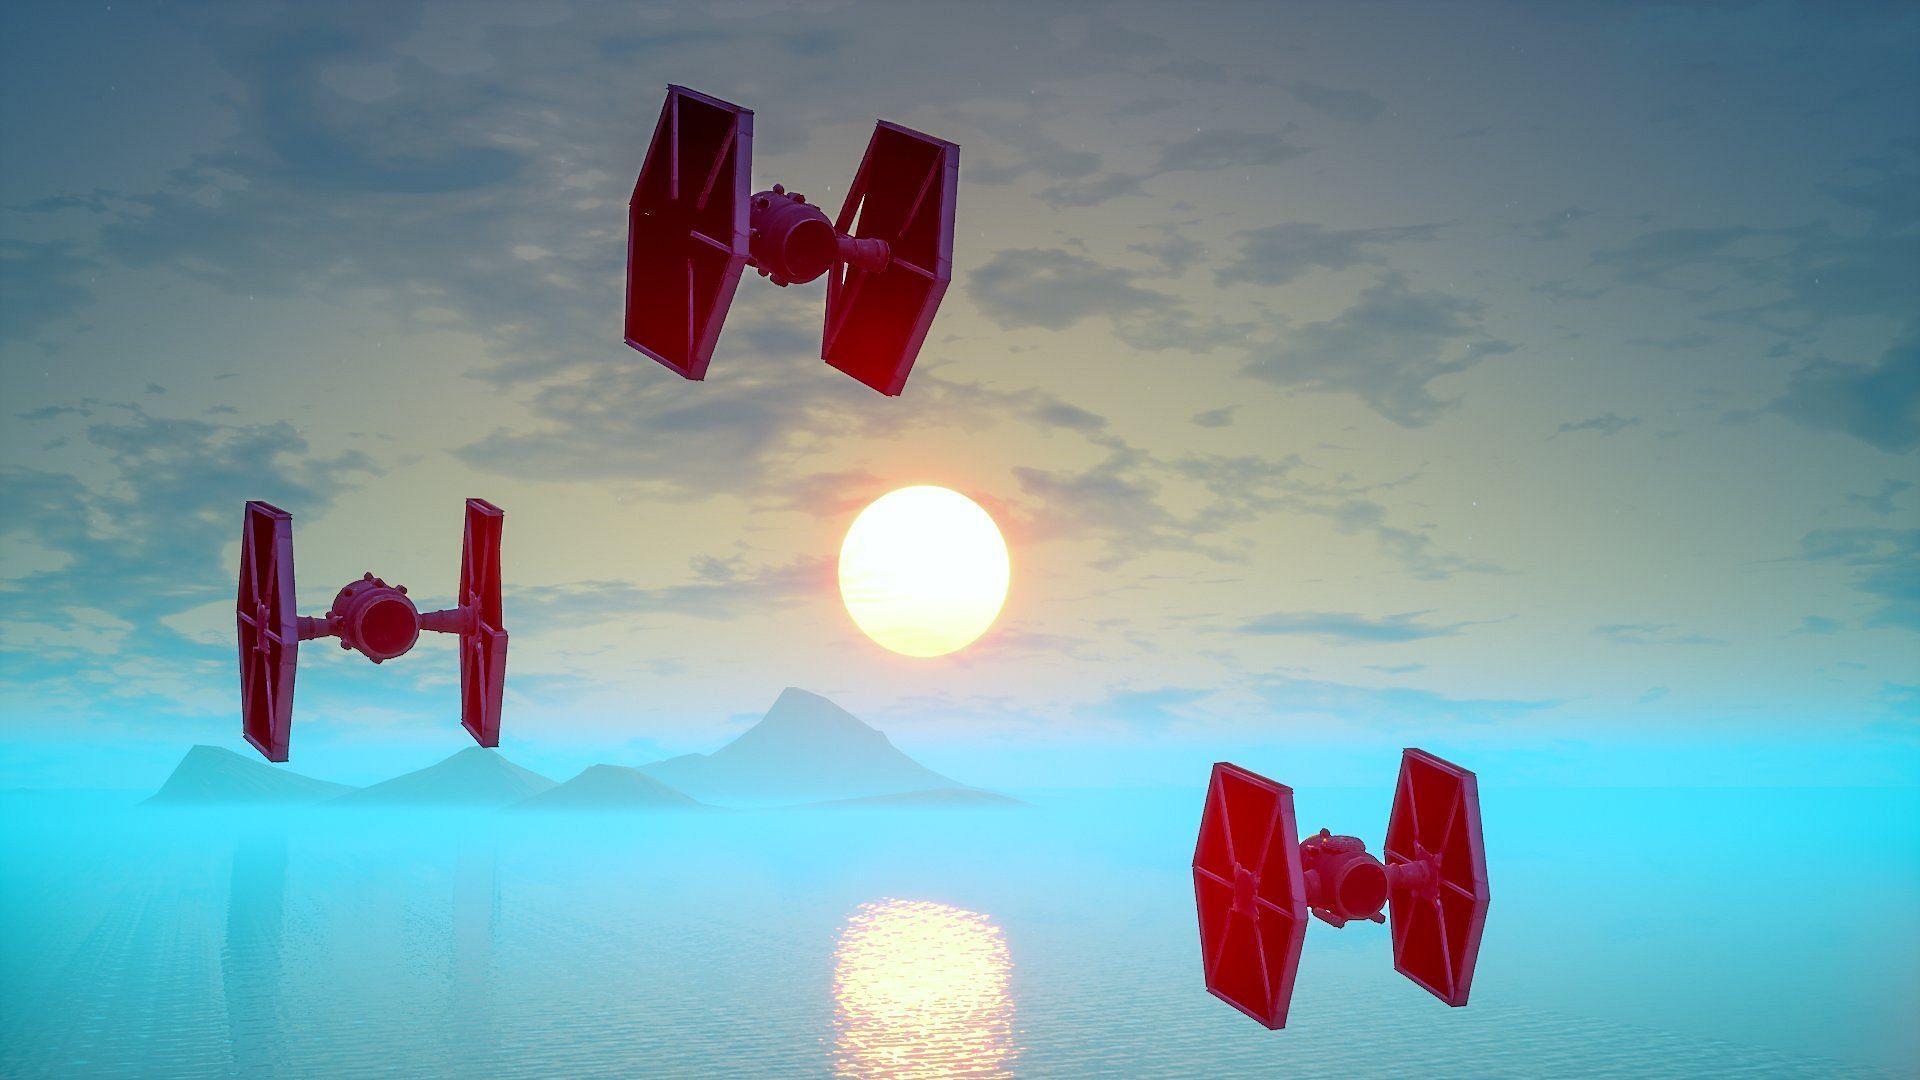 Lego Fortnite Star Wars collaboration leaked dialogue surface online (Image via Epic Games/Fortnite||X/luluufortnite)